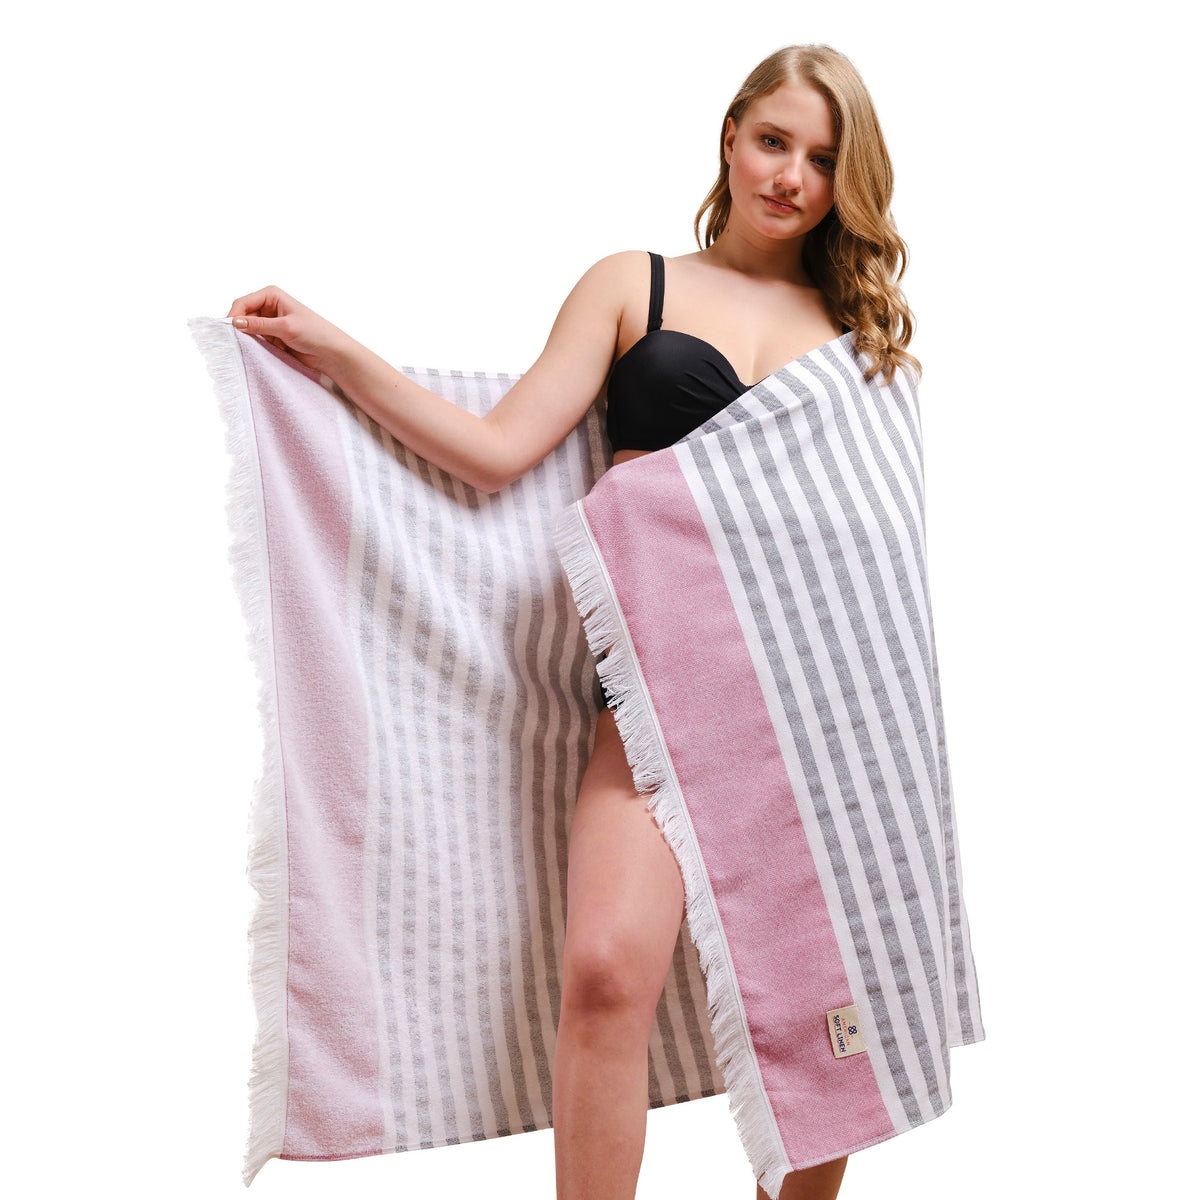 American Soft Linen Peshtemal Beach Towels, Turkish Terry 35x60 Inches - Brown